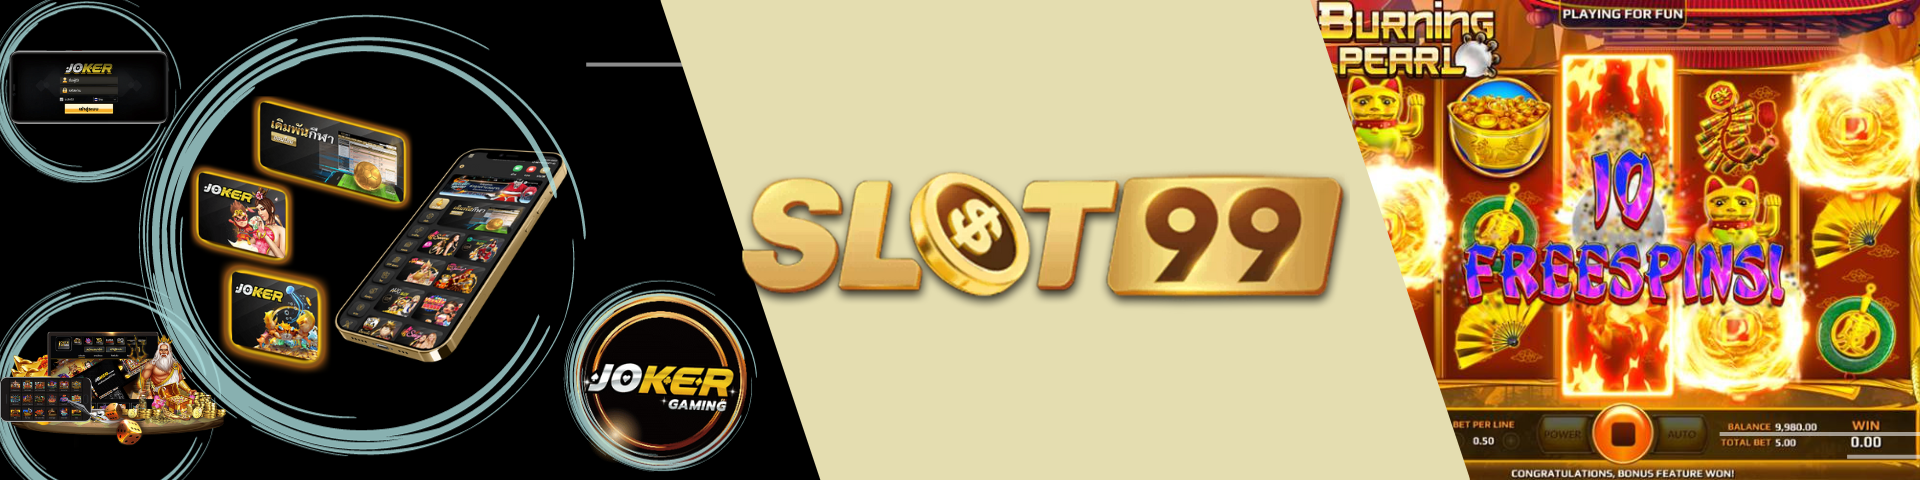 slot99 เว็บสล็อตยักษ์ใหญ่